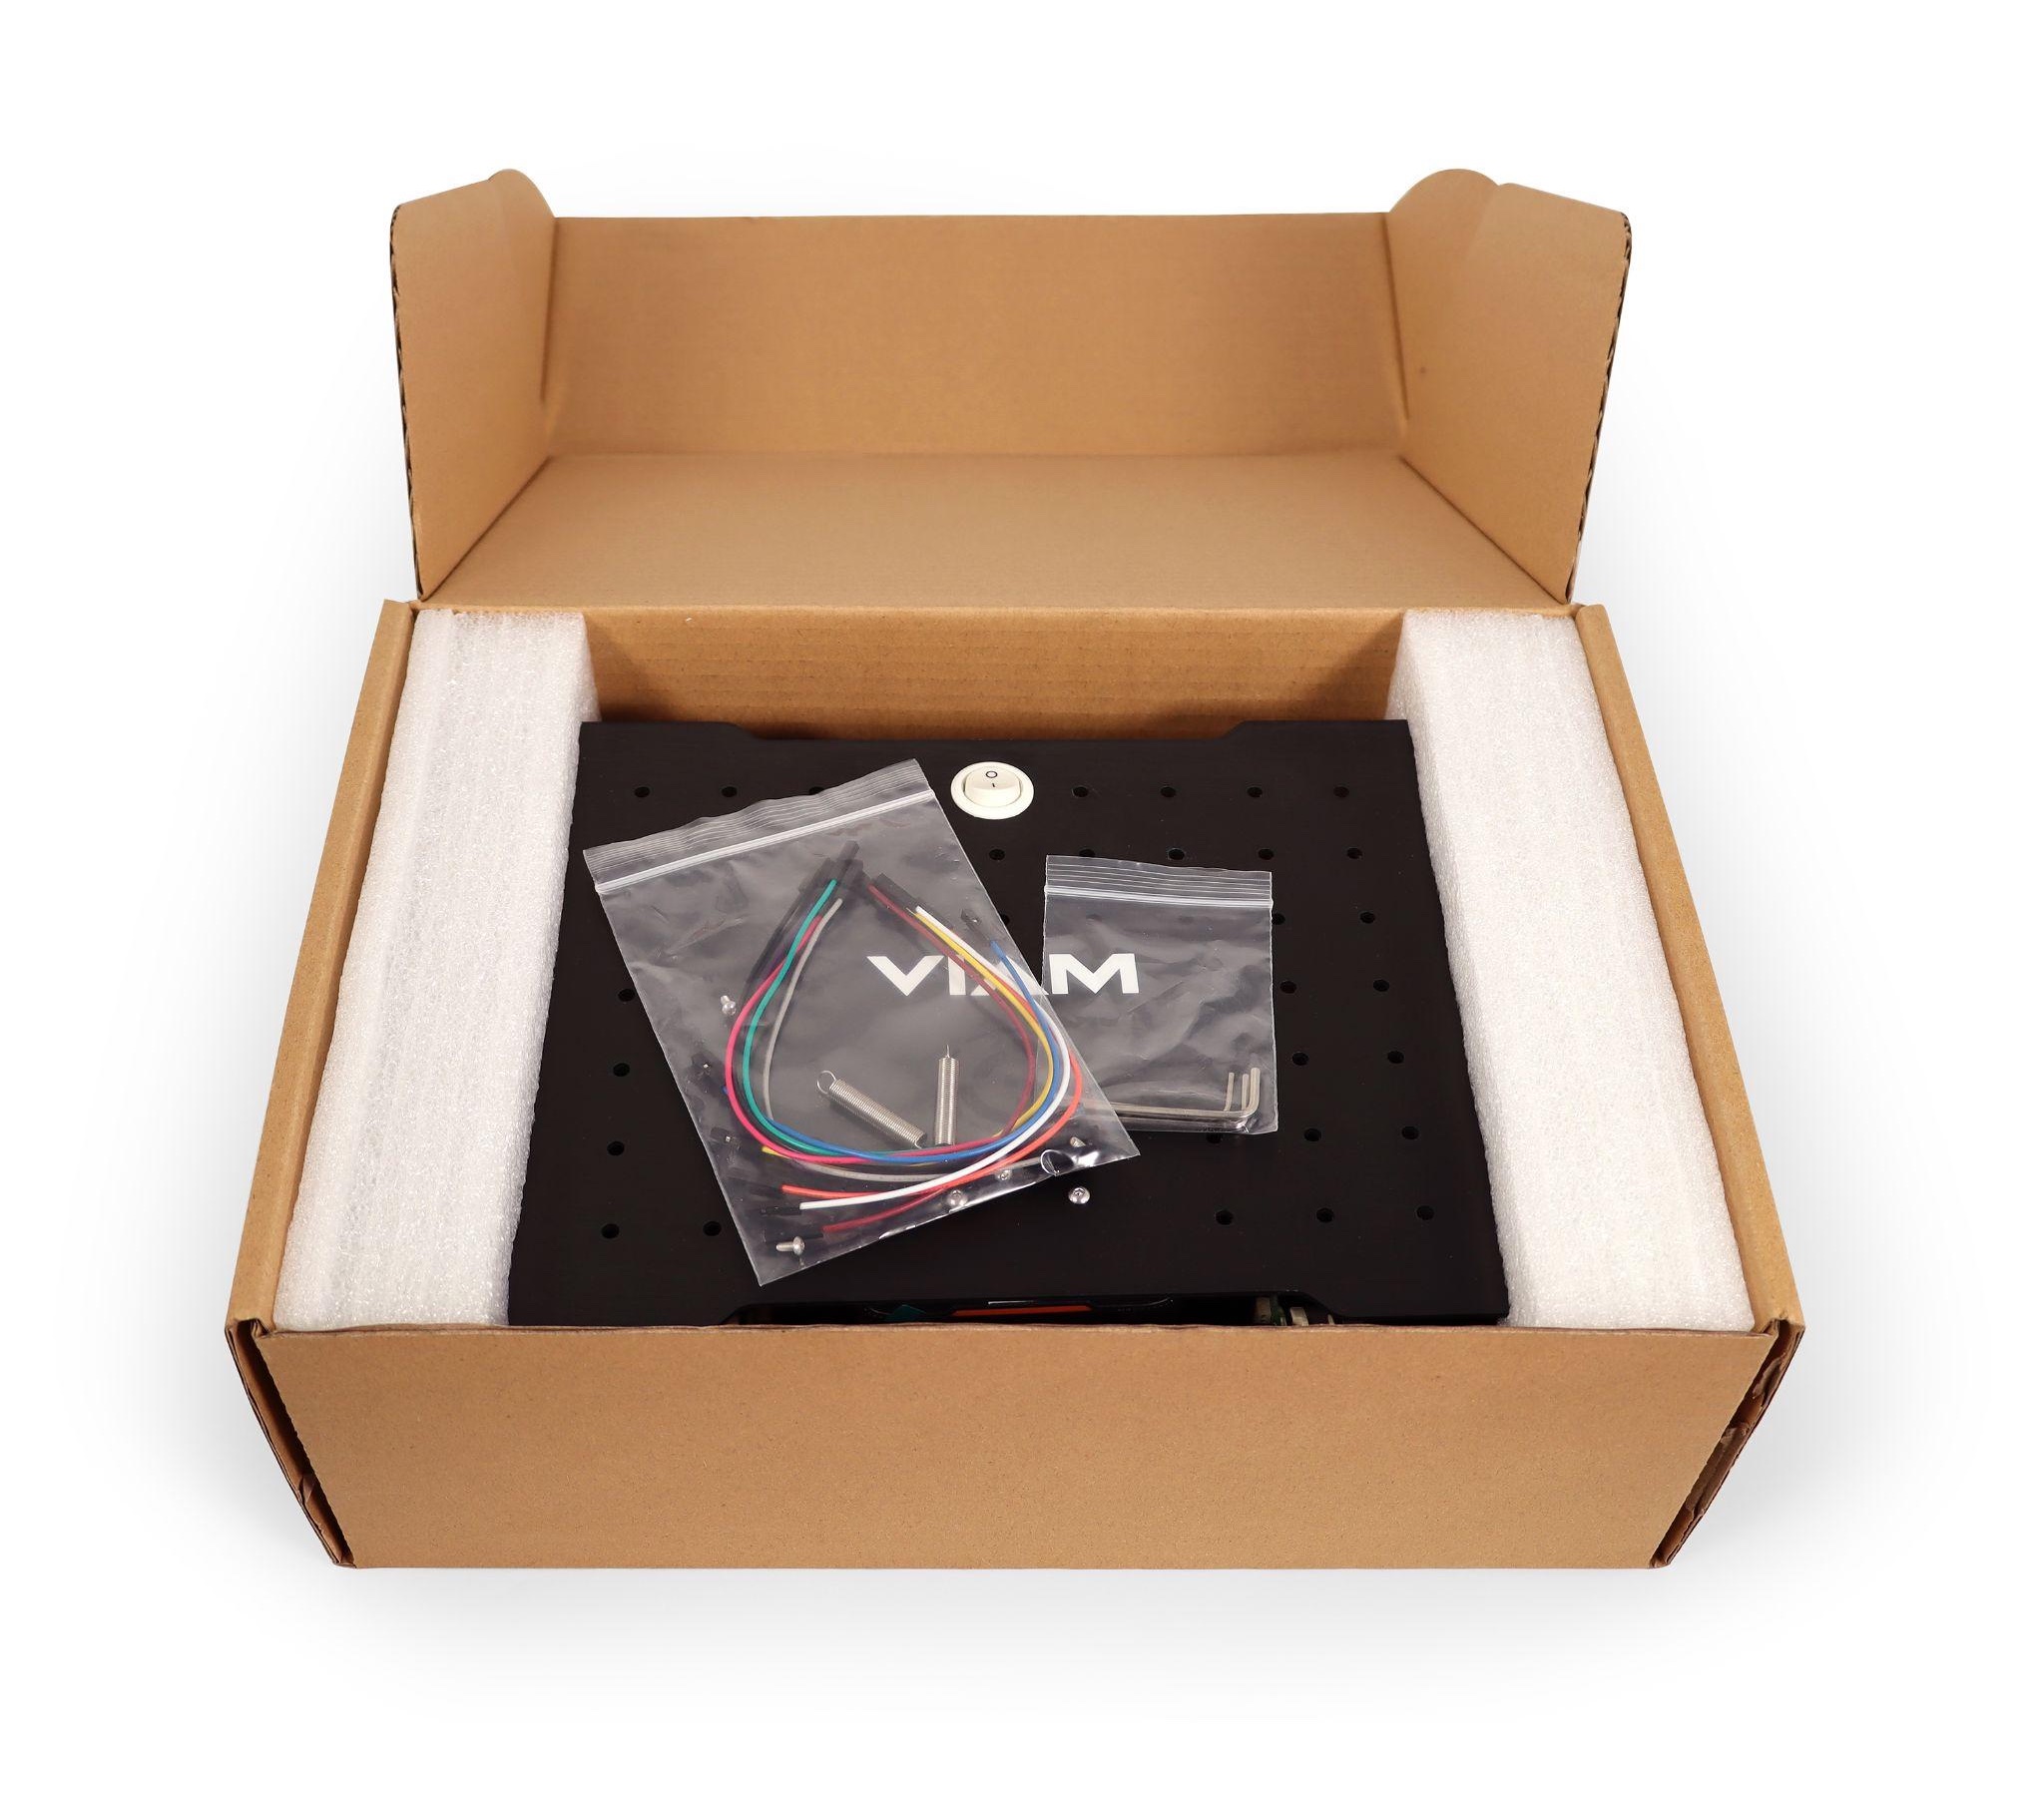 A Viam Rover 1 shipping box contents